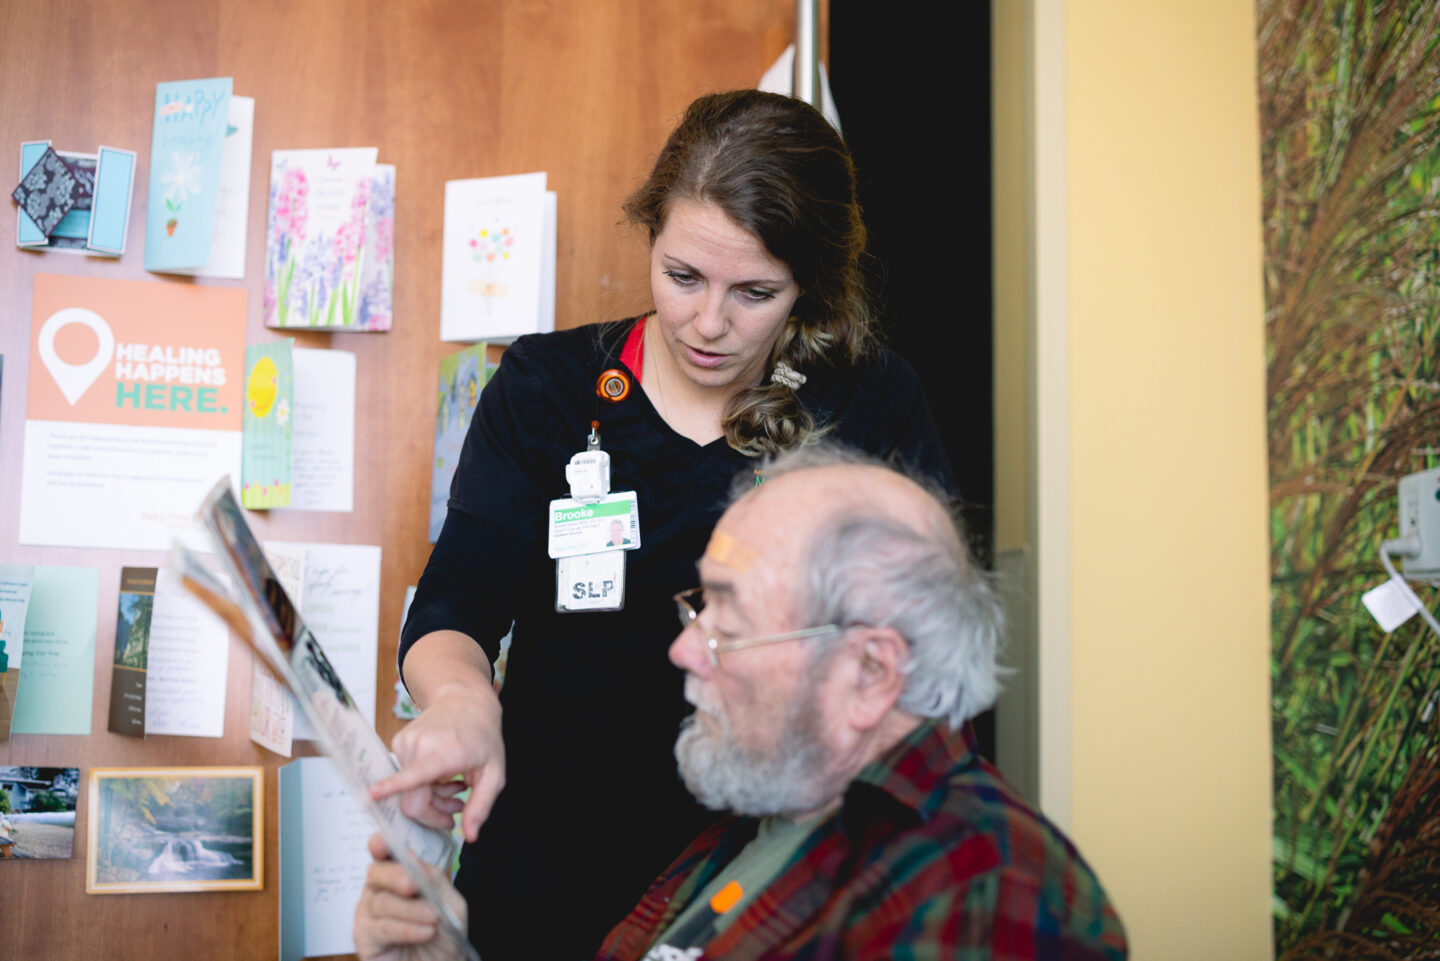 Speech-language pathologist working with a senior man on speech therapy tasks.